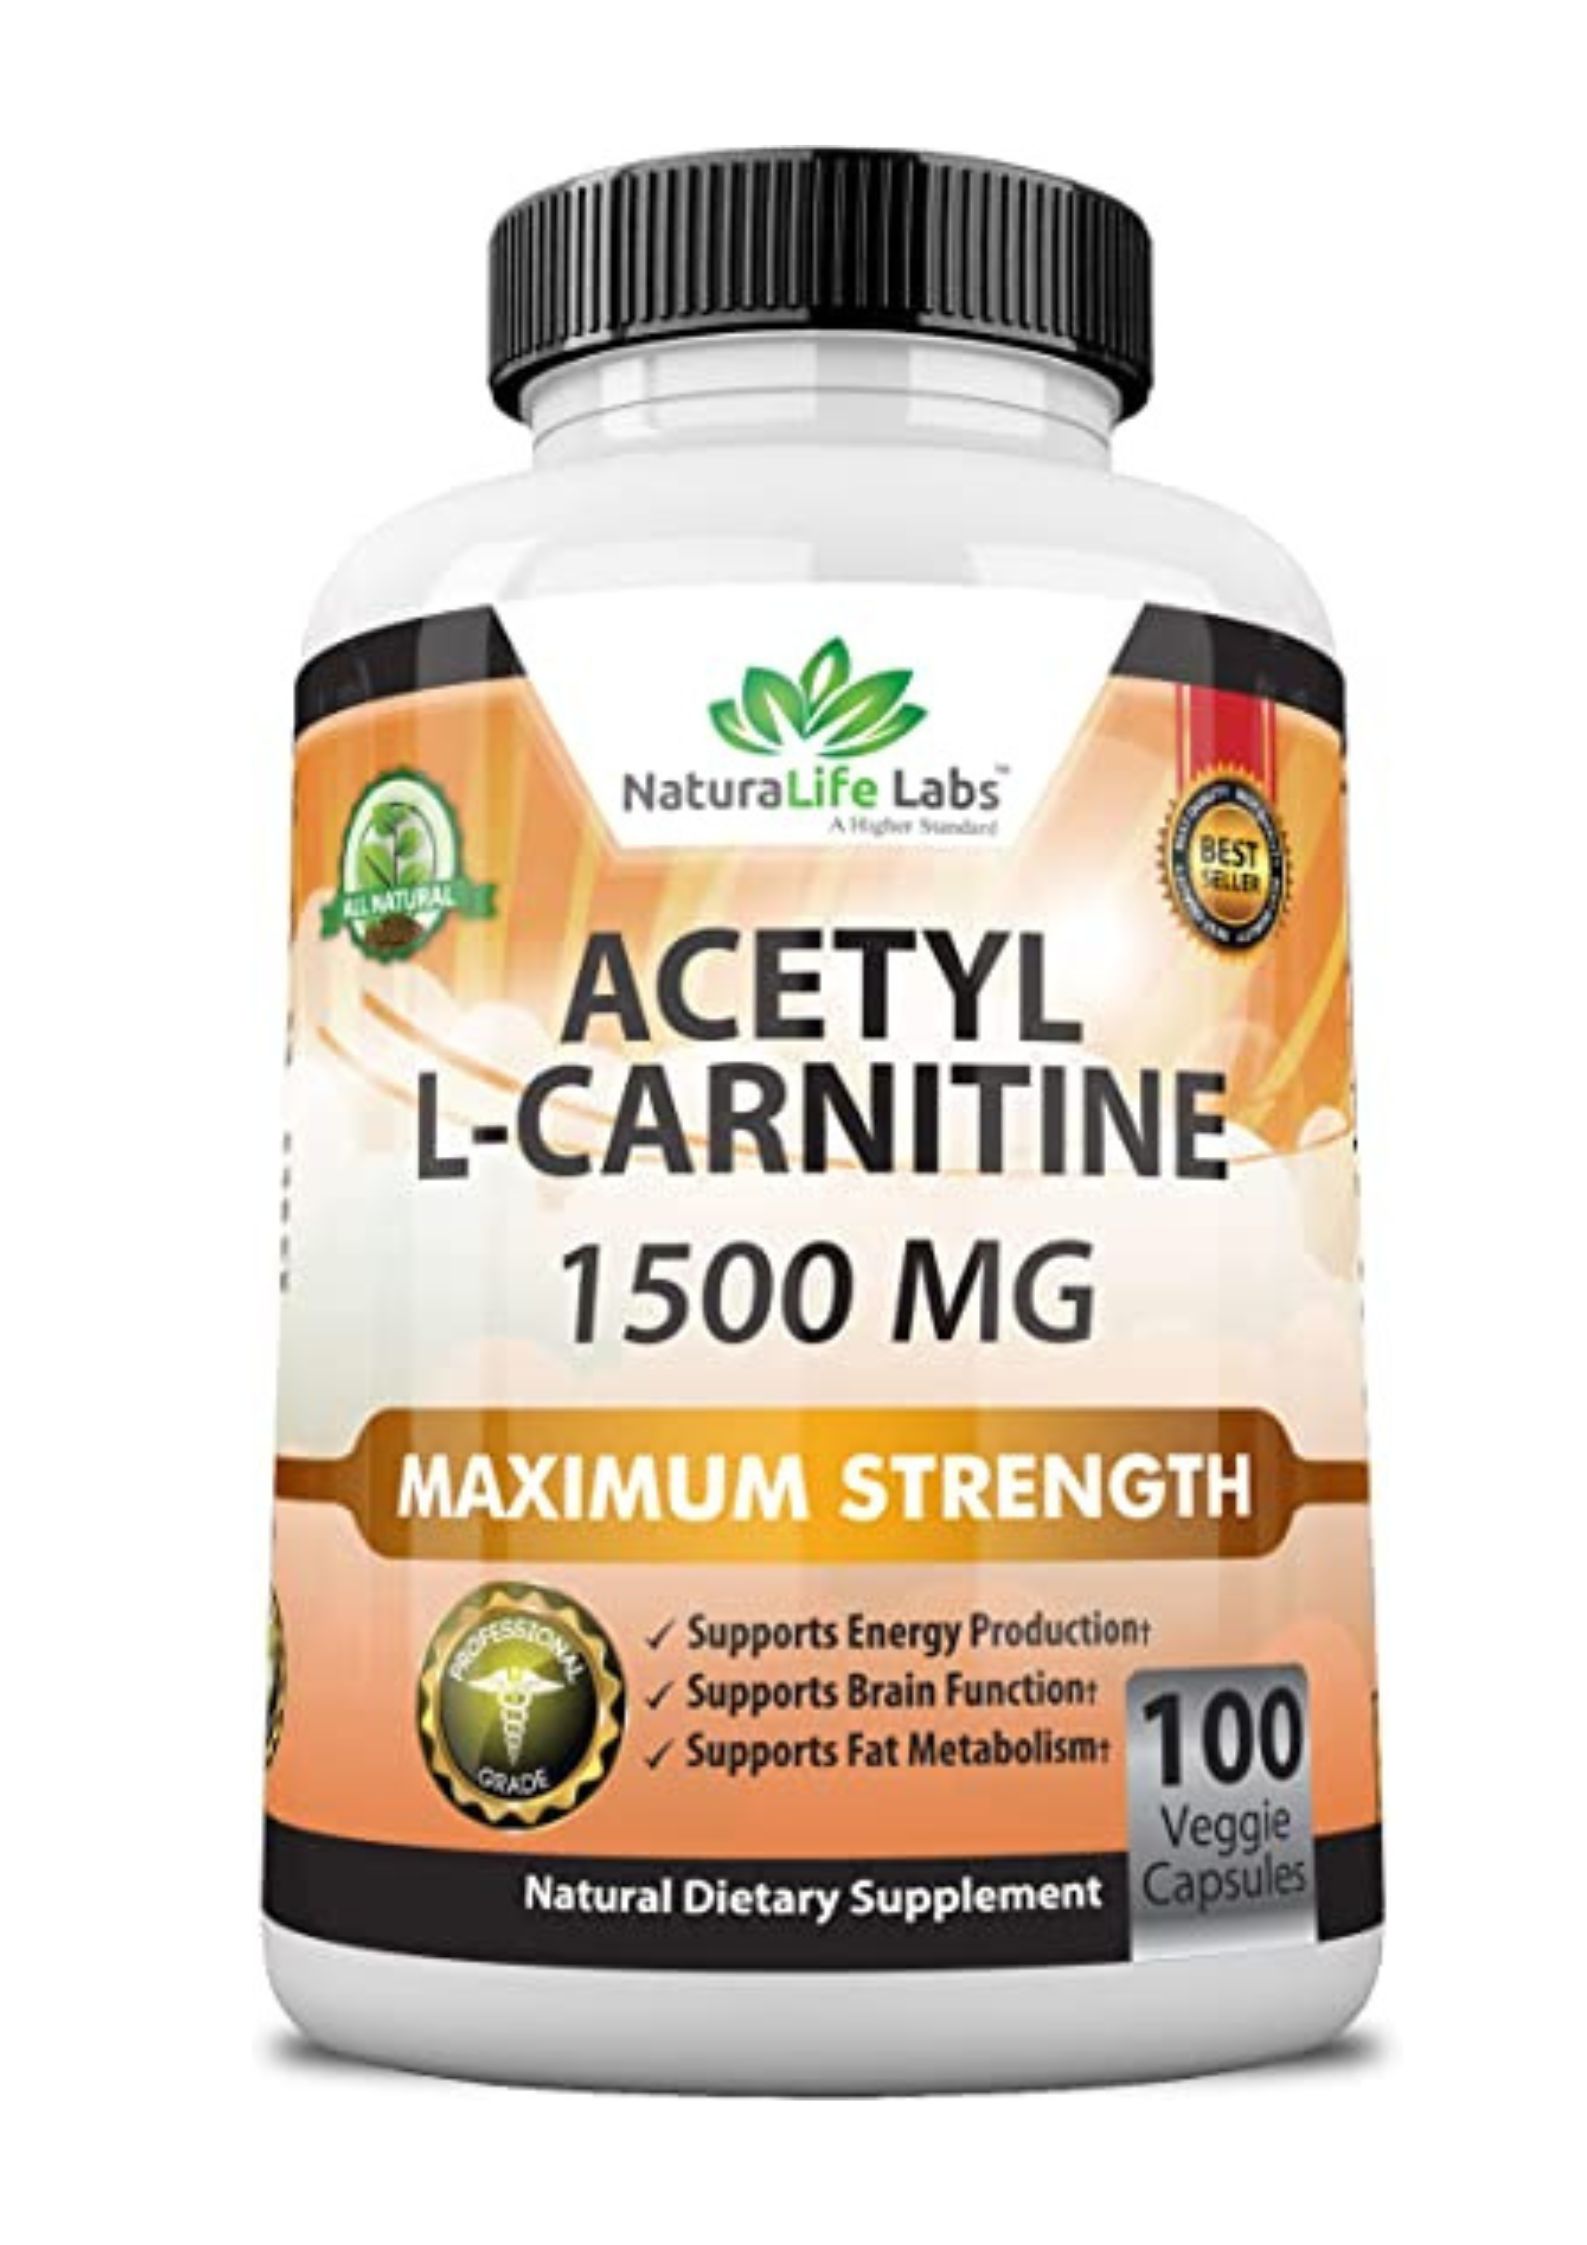 NaturaLife Labs Acetyl L-Carnitine 1500mg Maximum